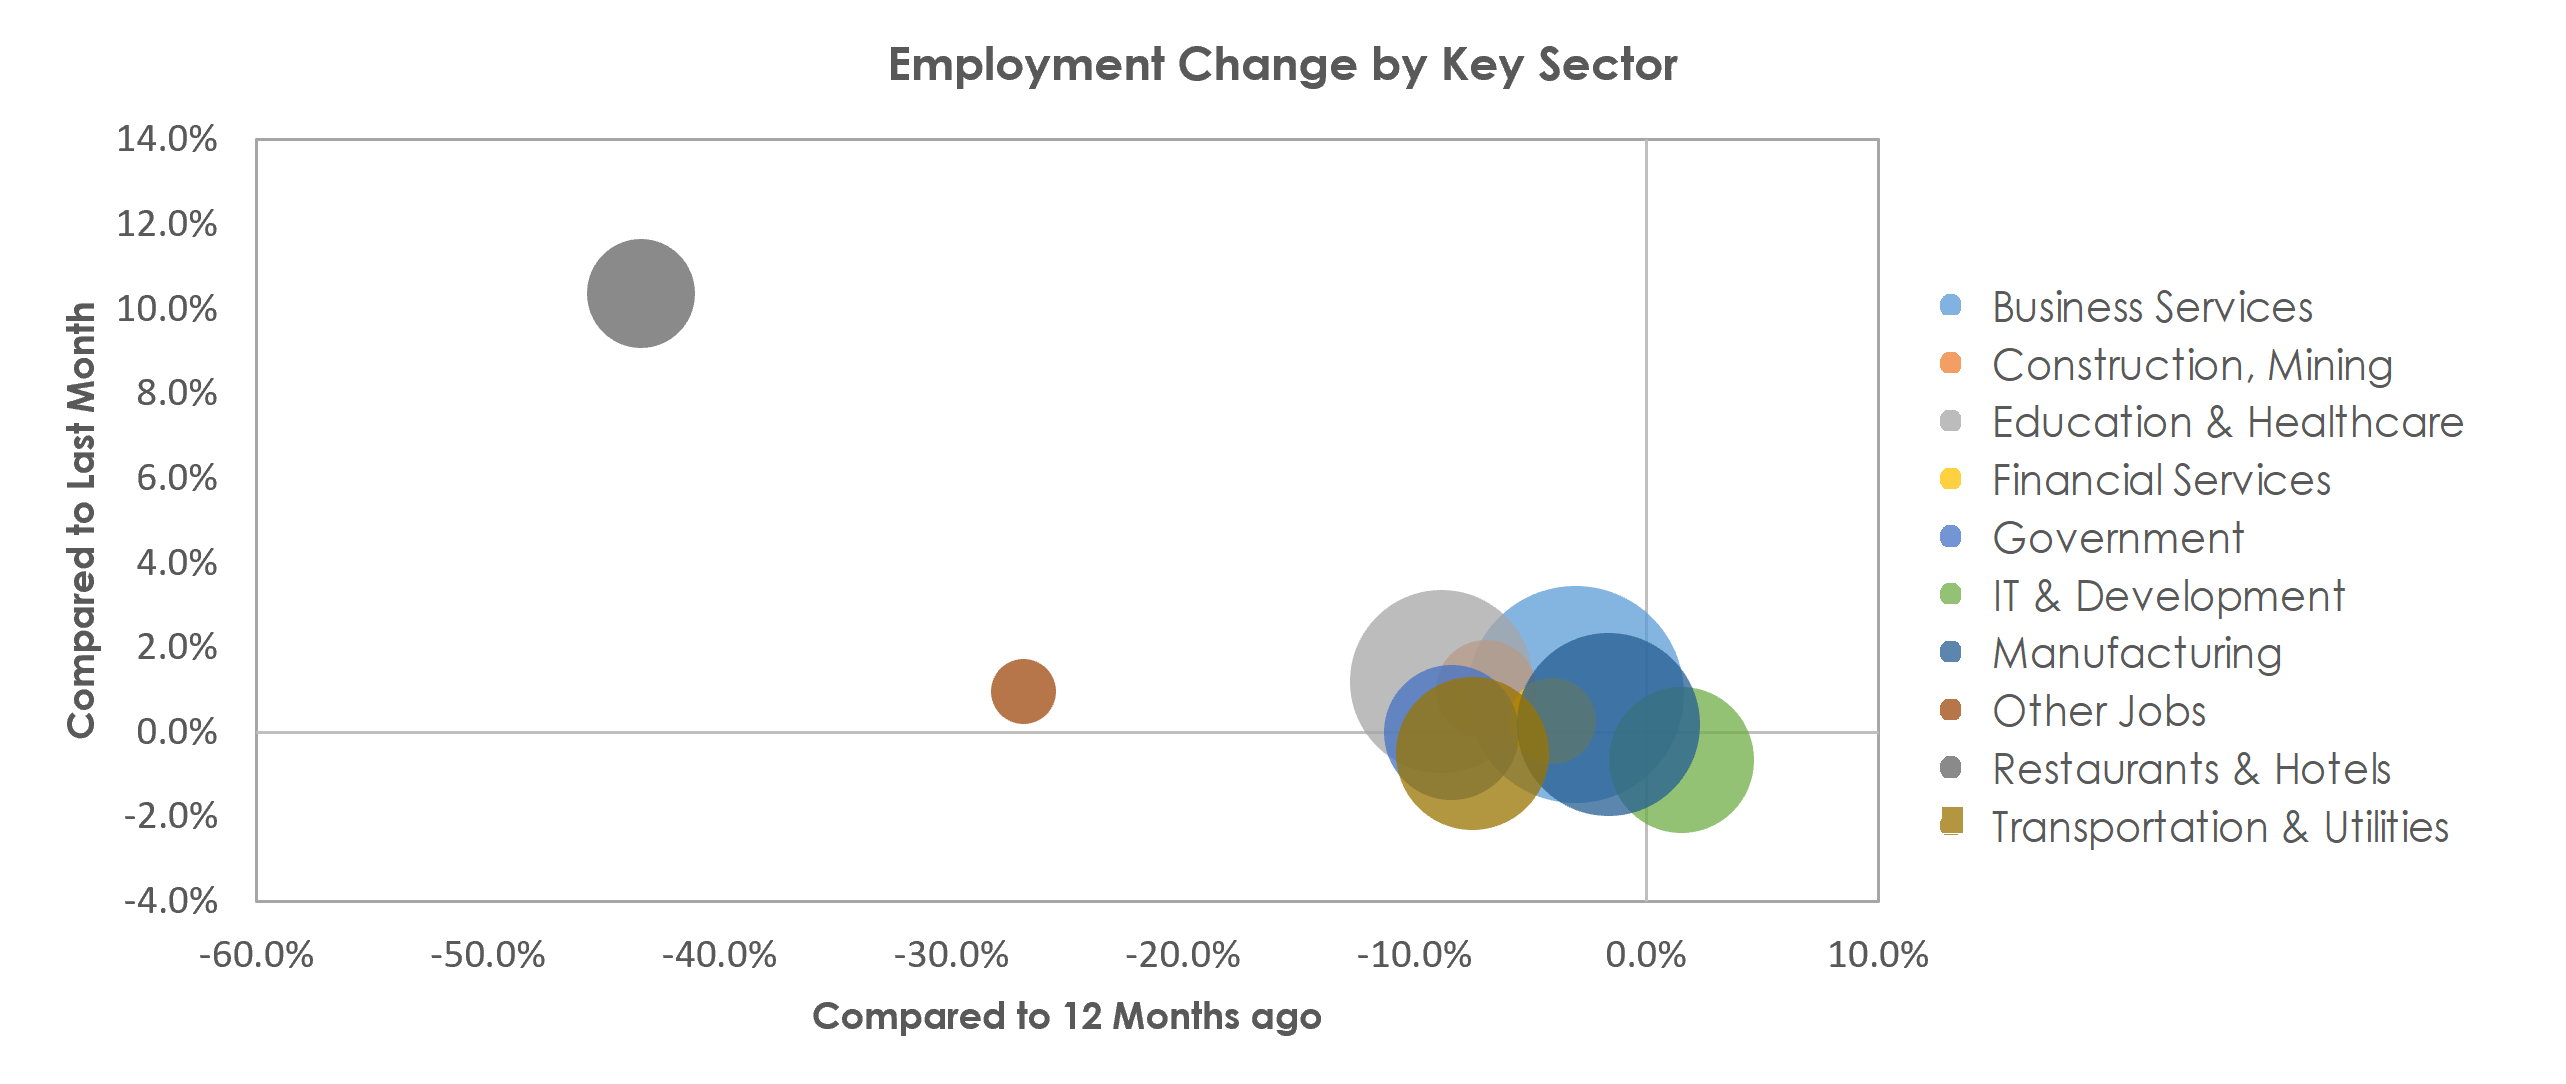 San Jose-Sunnyvale-Santa Clara, CA Unemployment by Industry February 2021